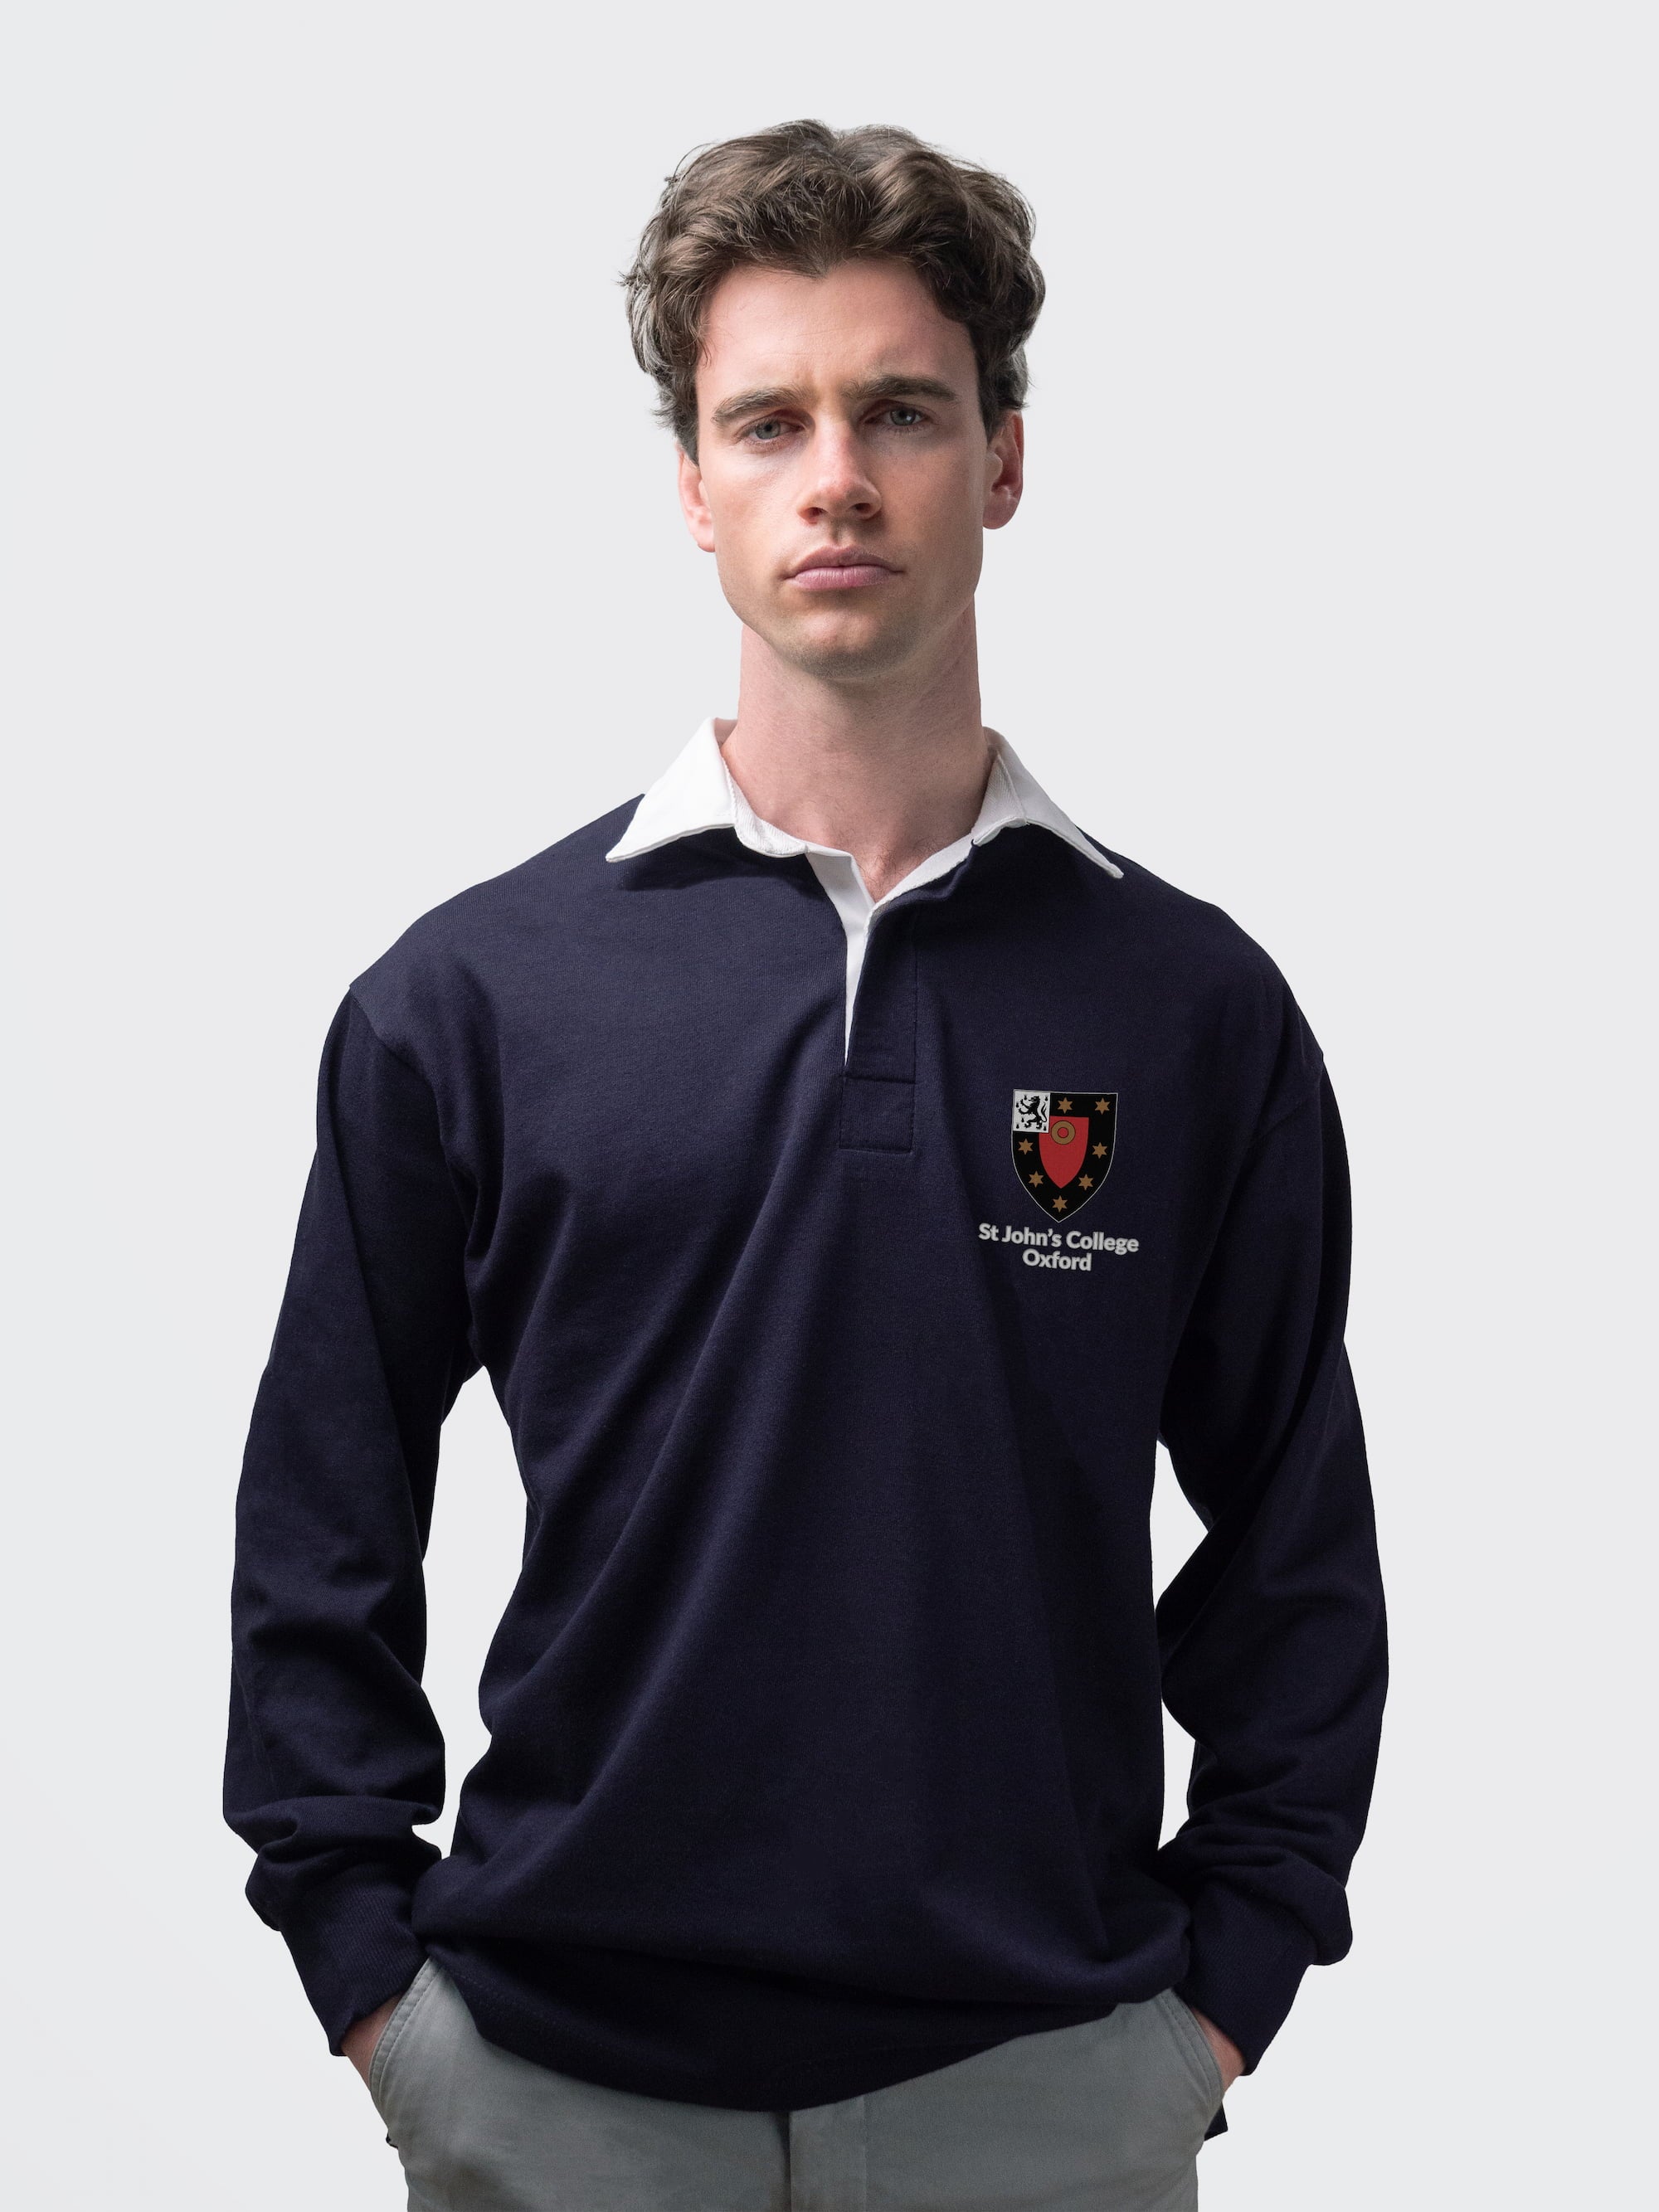 St John's College Oxford JCR Classic Men's Rugby Shirt